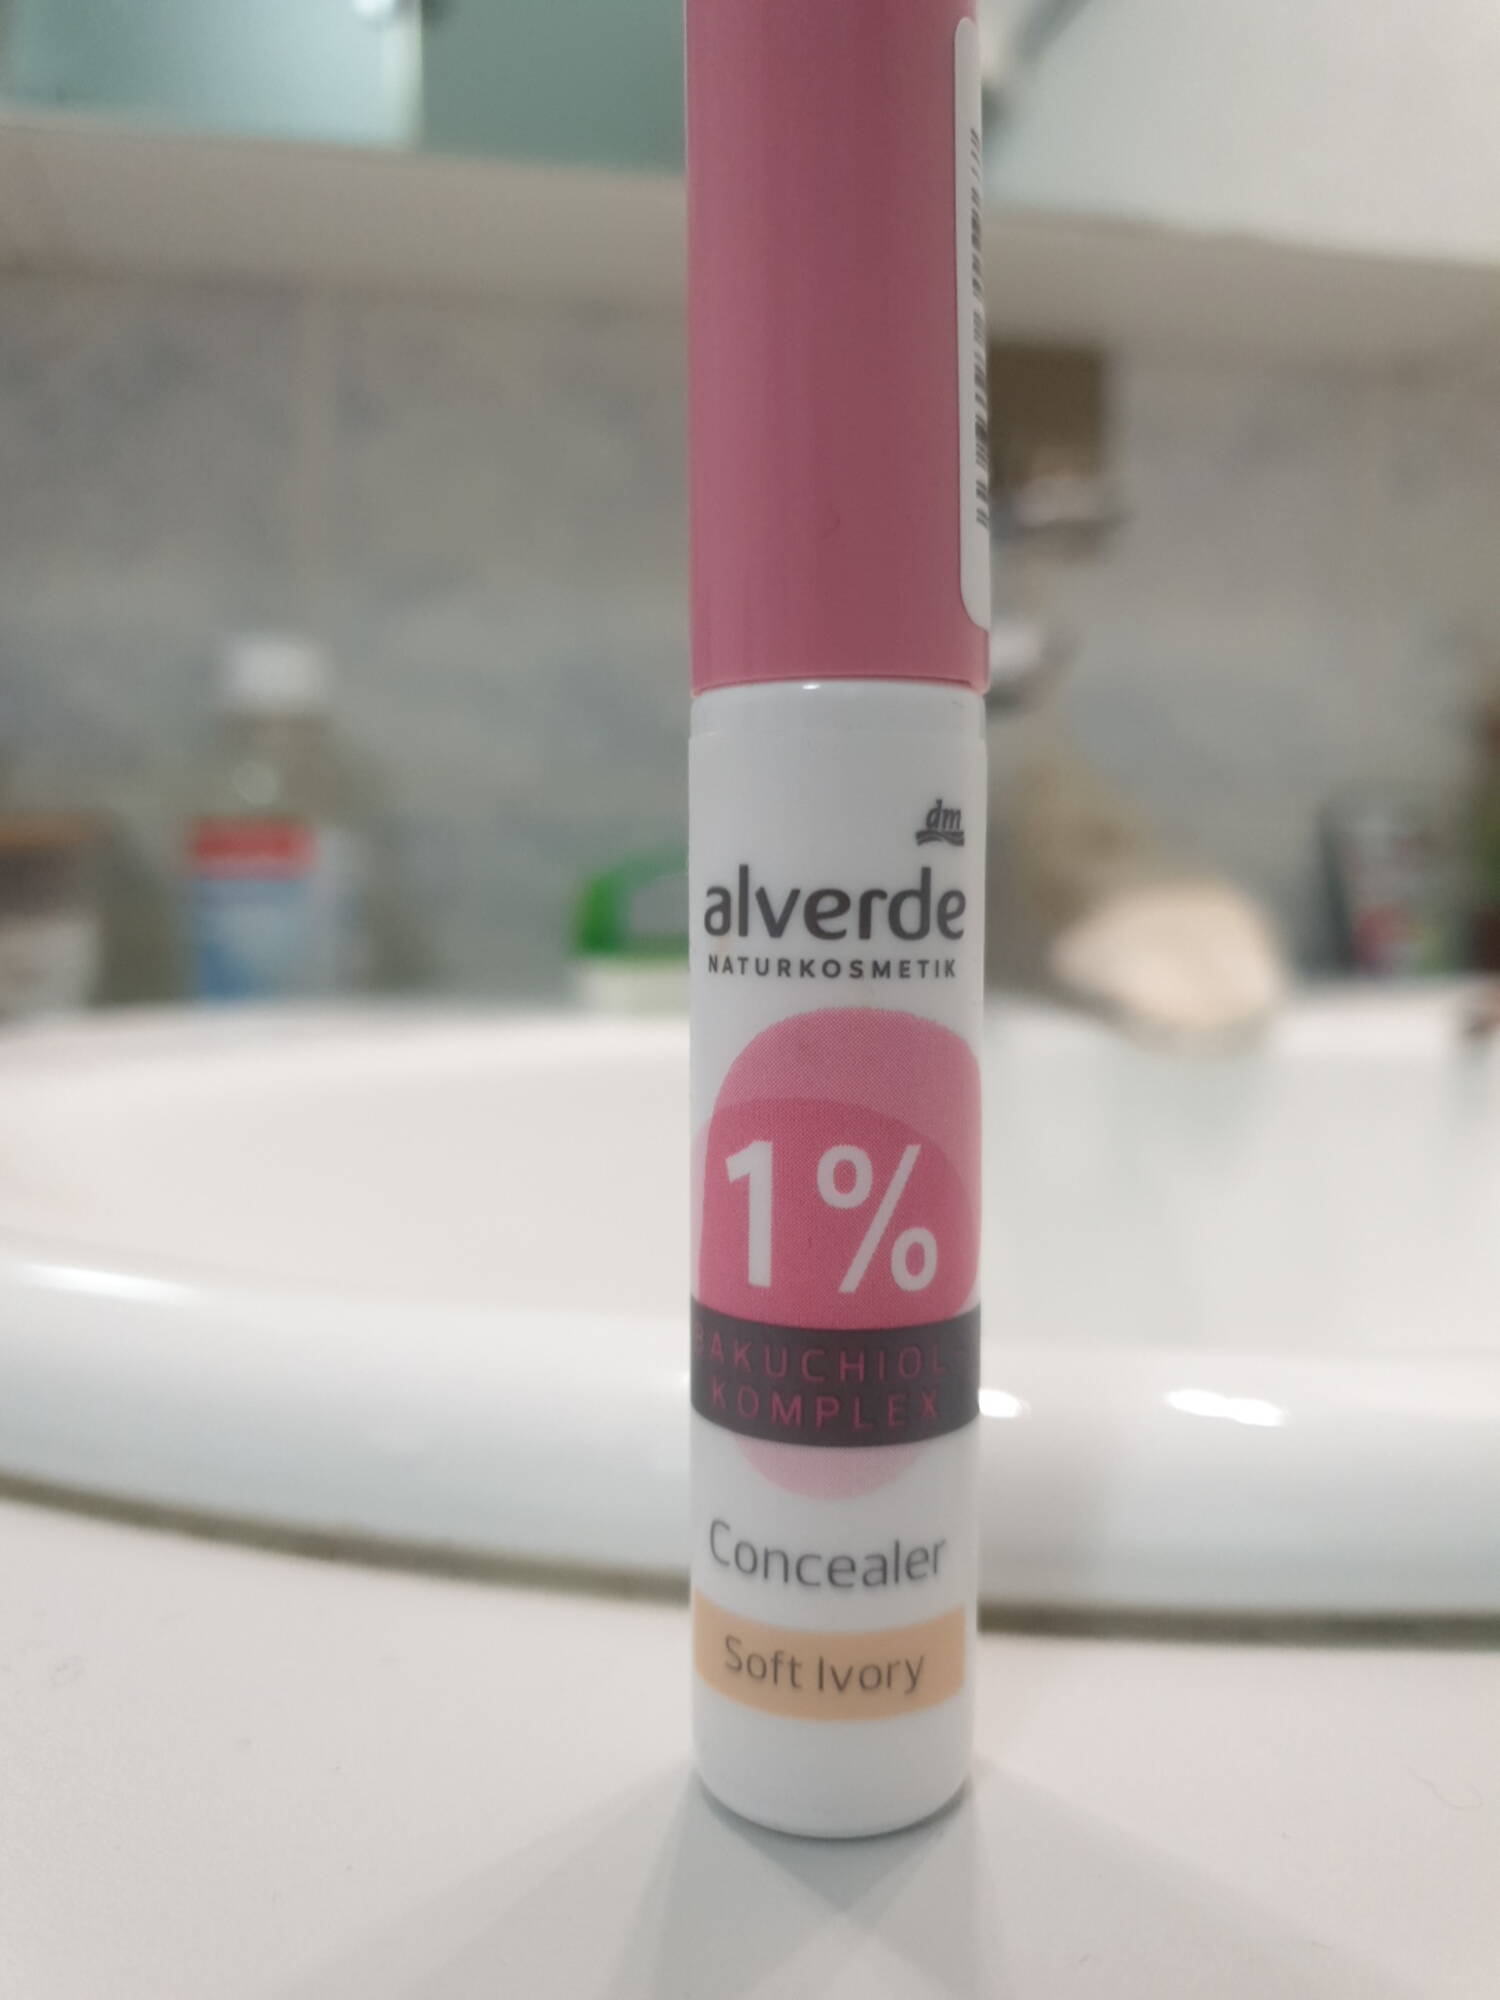 ALVERDE - Concealer 1% bakuchiol komplex soft ivory